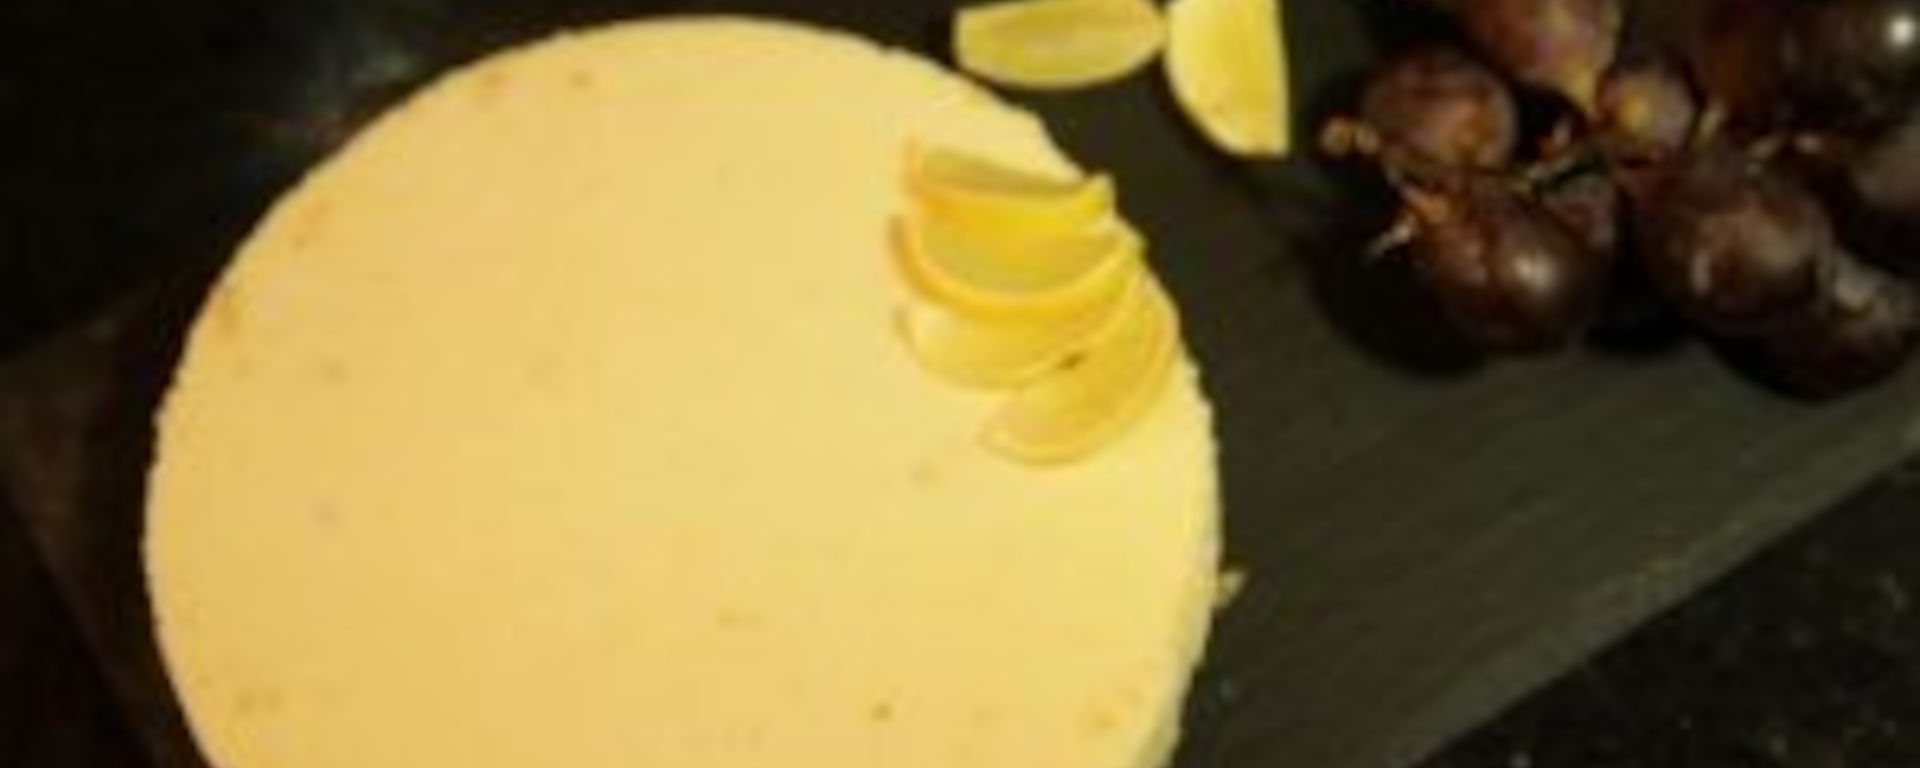 LuvMyRecipe.com - Luscious No-Bake Lemon Cheesecake Featured